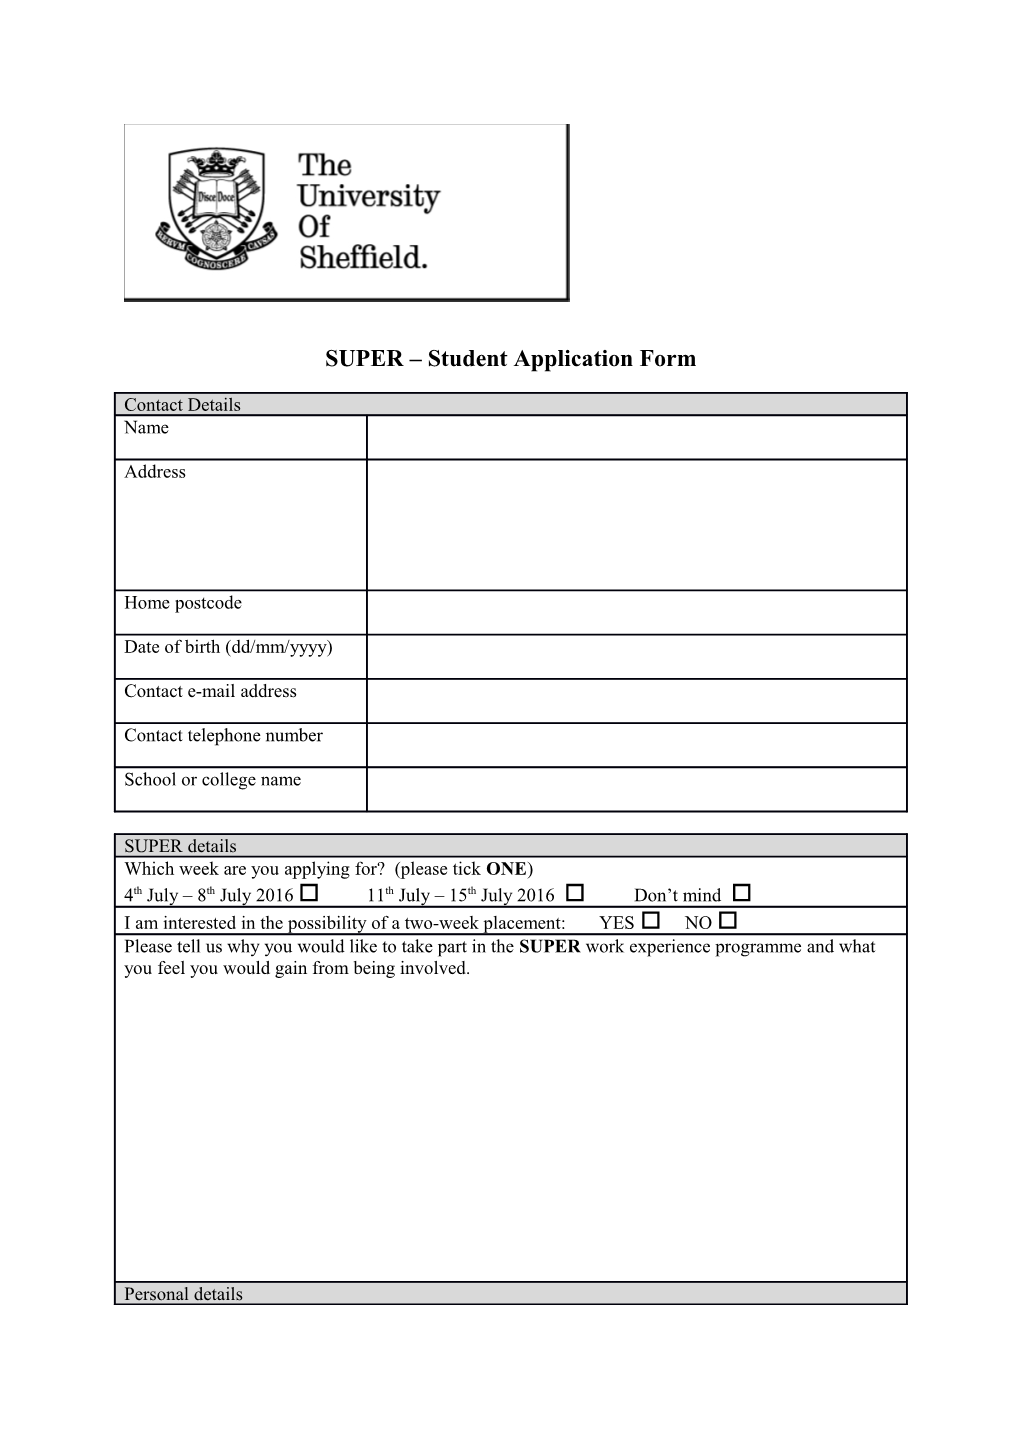 SUPER Student Application Form